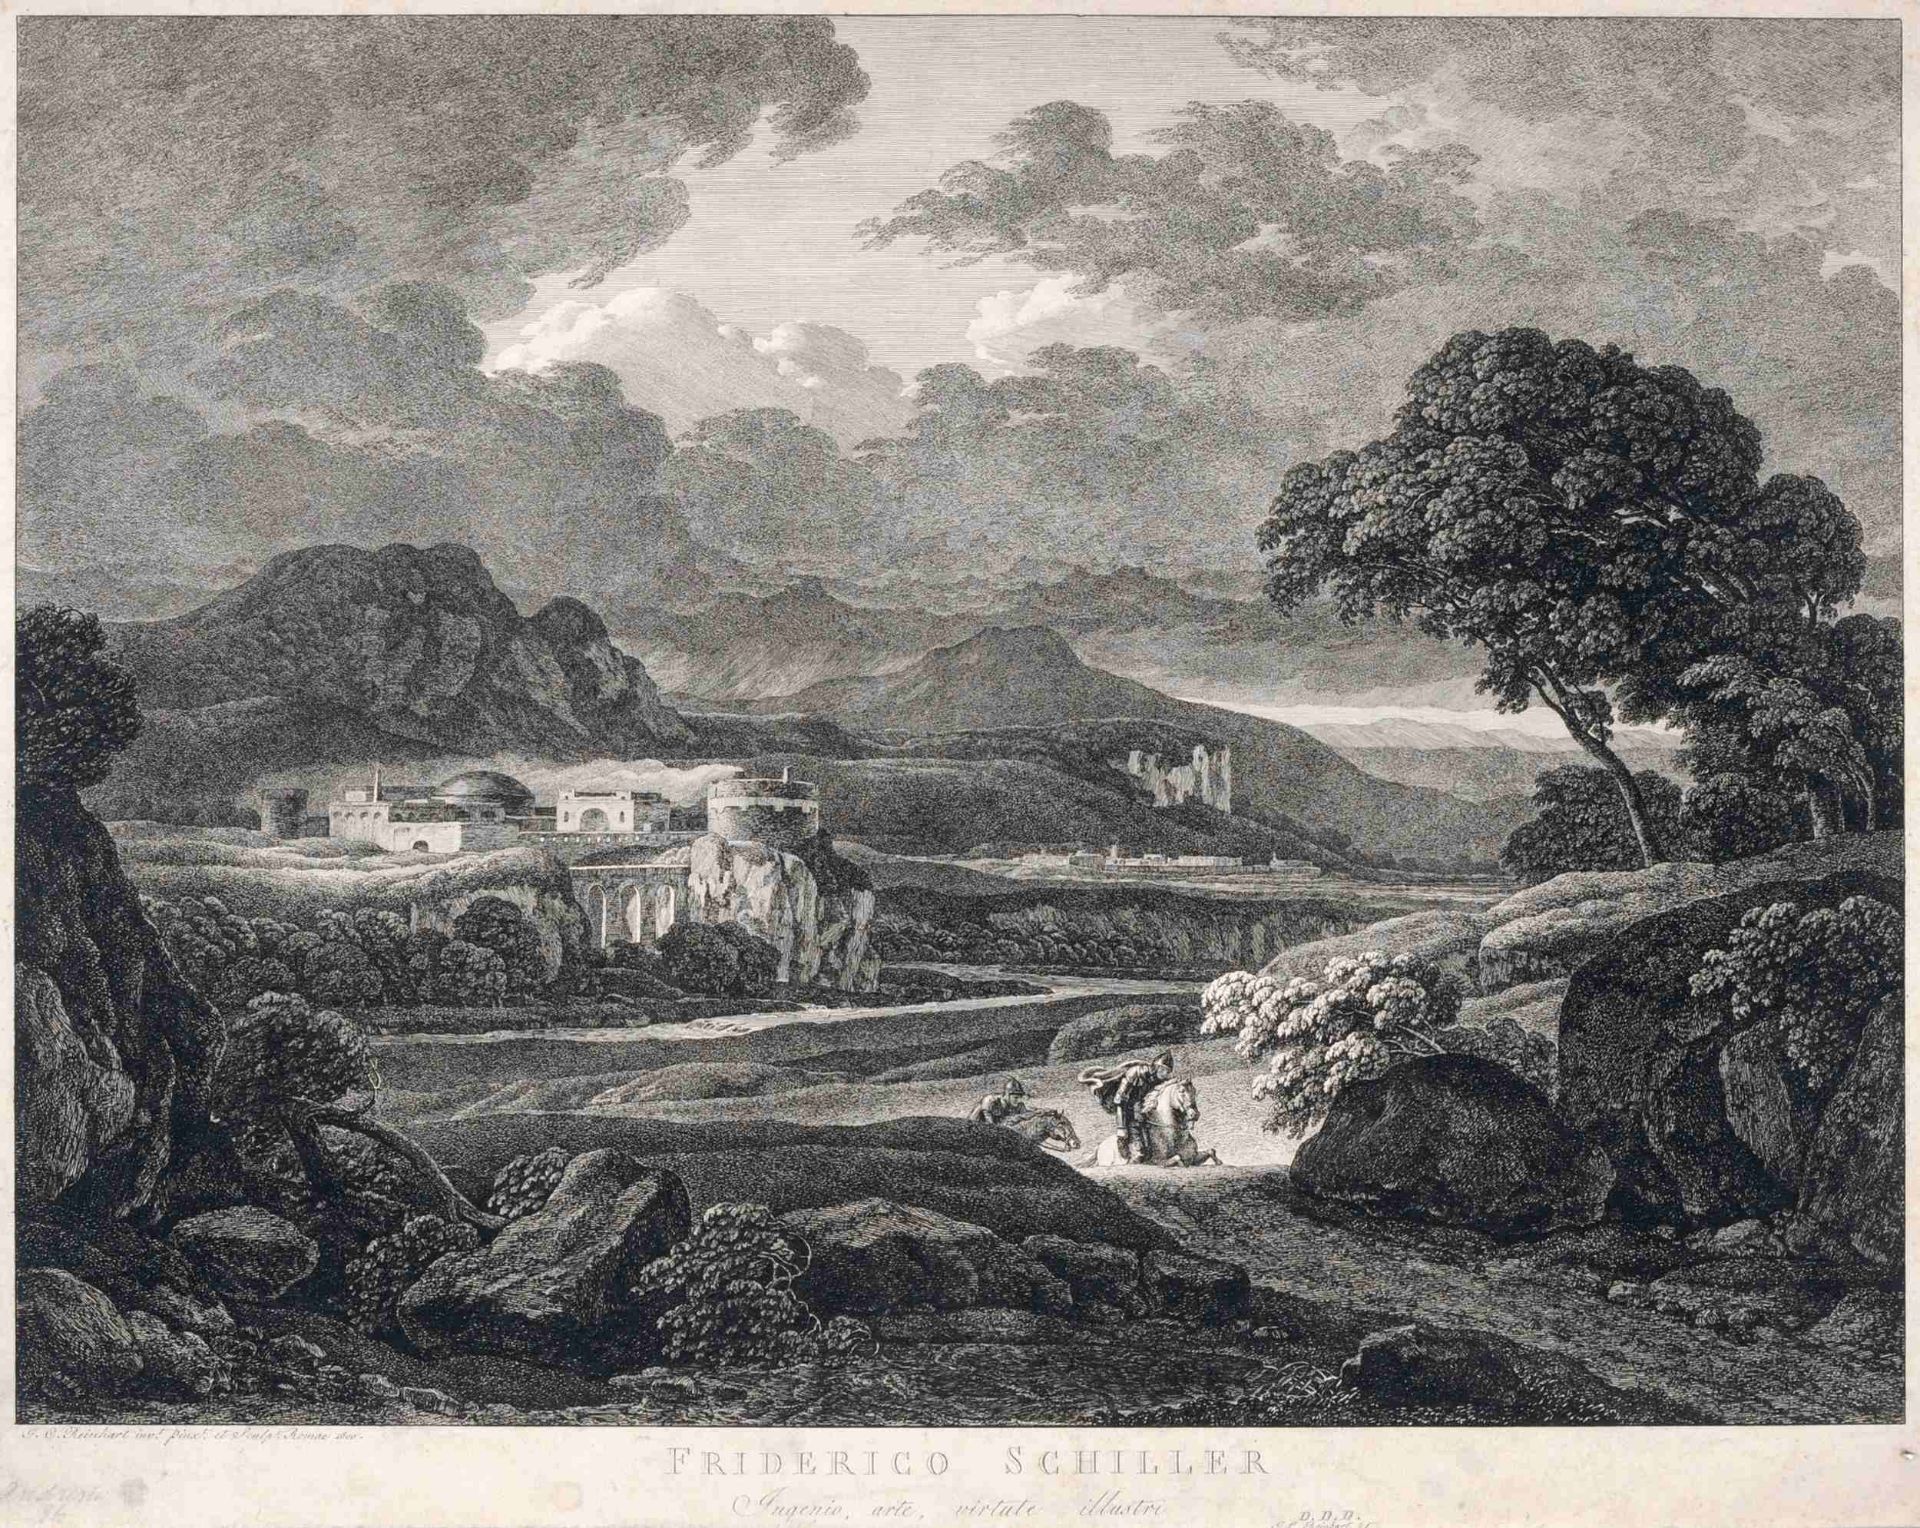 Johann Christian Reinhart "Die grosse heroische, Schiller dedicierte Landschaft". 1800.